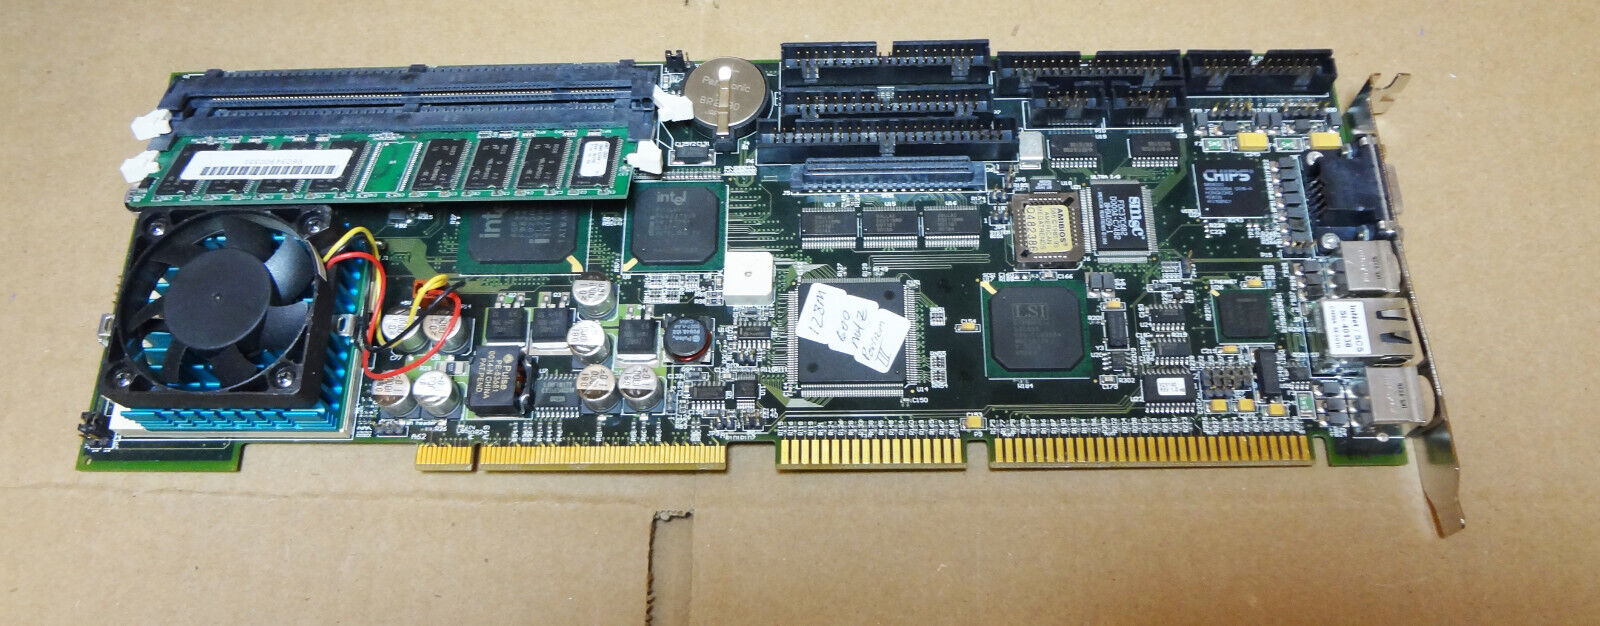 Vintage Crystal V10308 REV. 1.0 SBC 600MHZ Pentium III, 128M Memory, Board